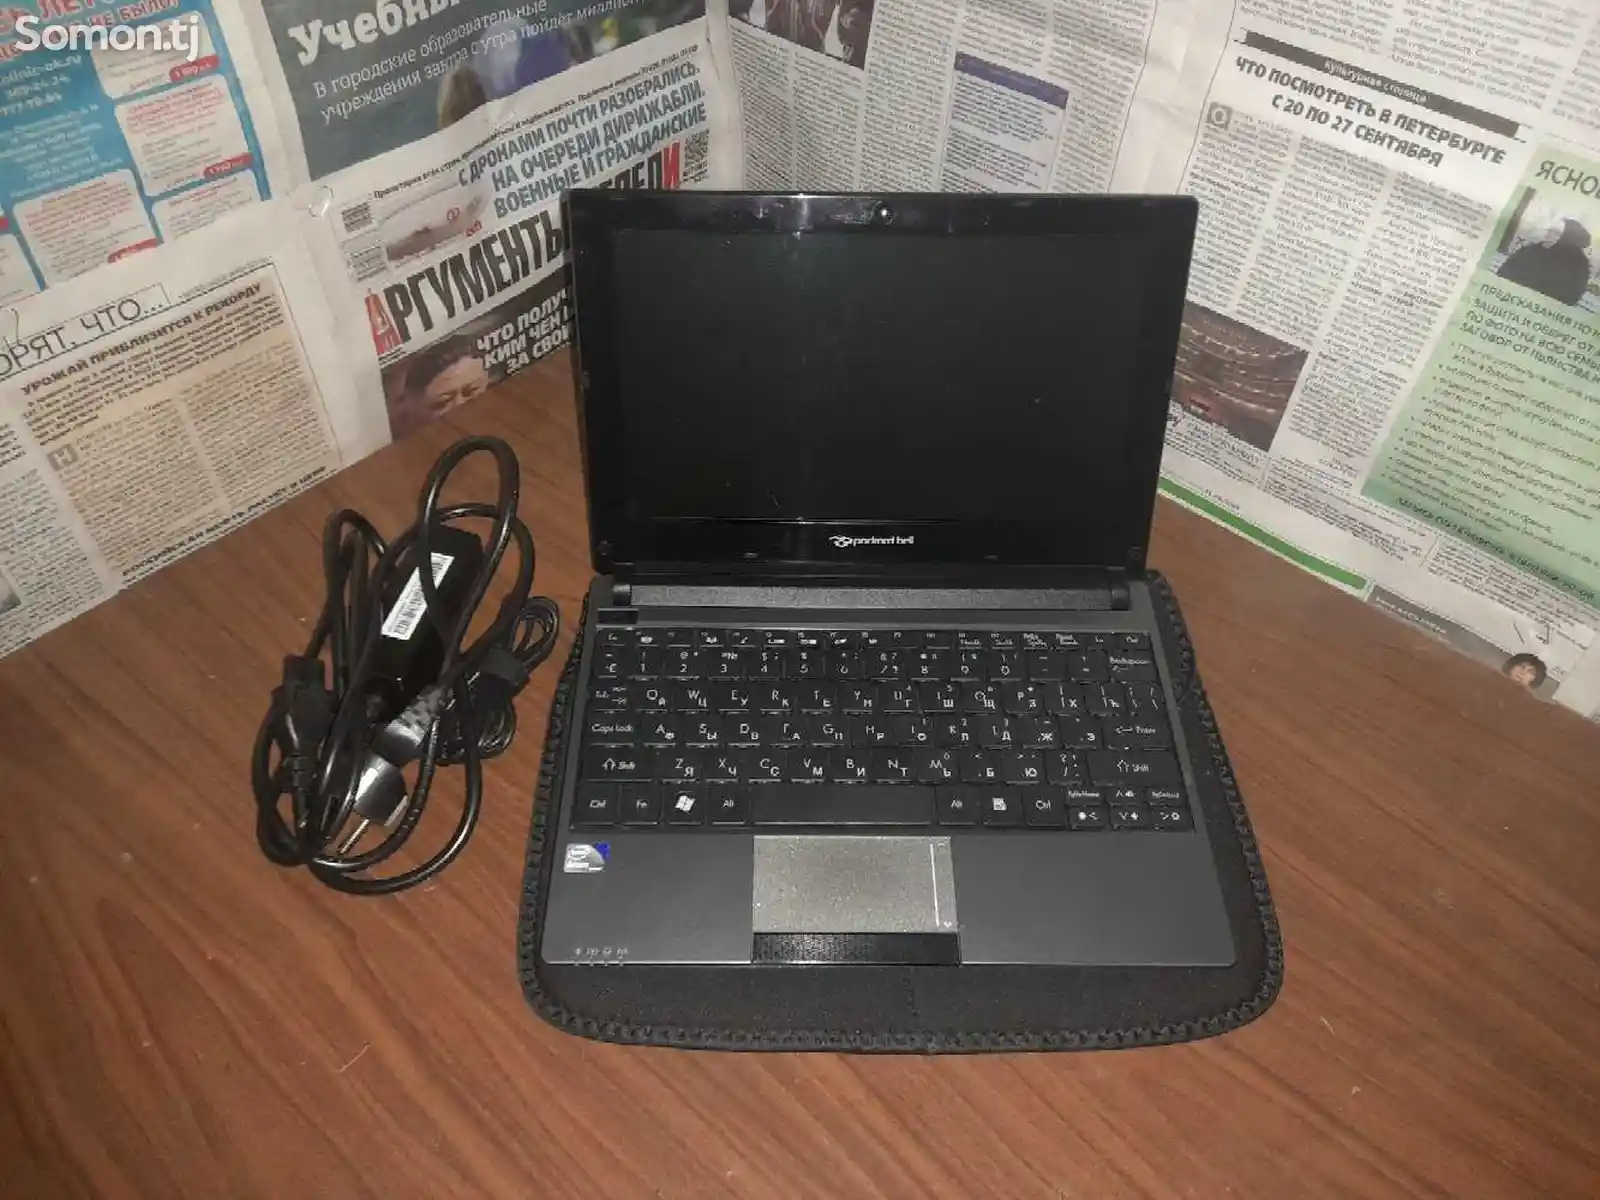 Ноутбук Packard bell 500ГБ, Intel Atom N570, RAM 2 ГБ, Intel GMA 3150-4